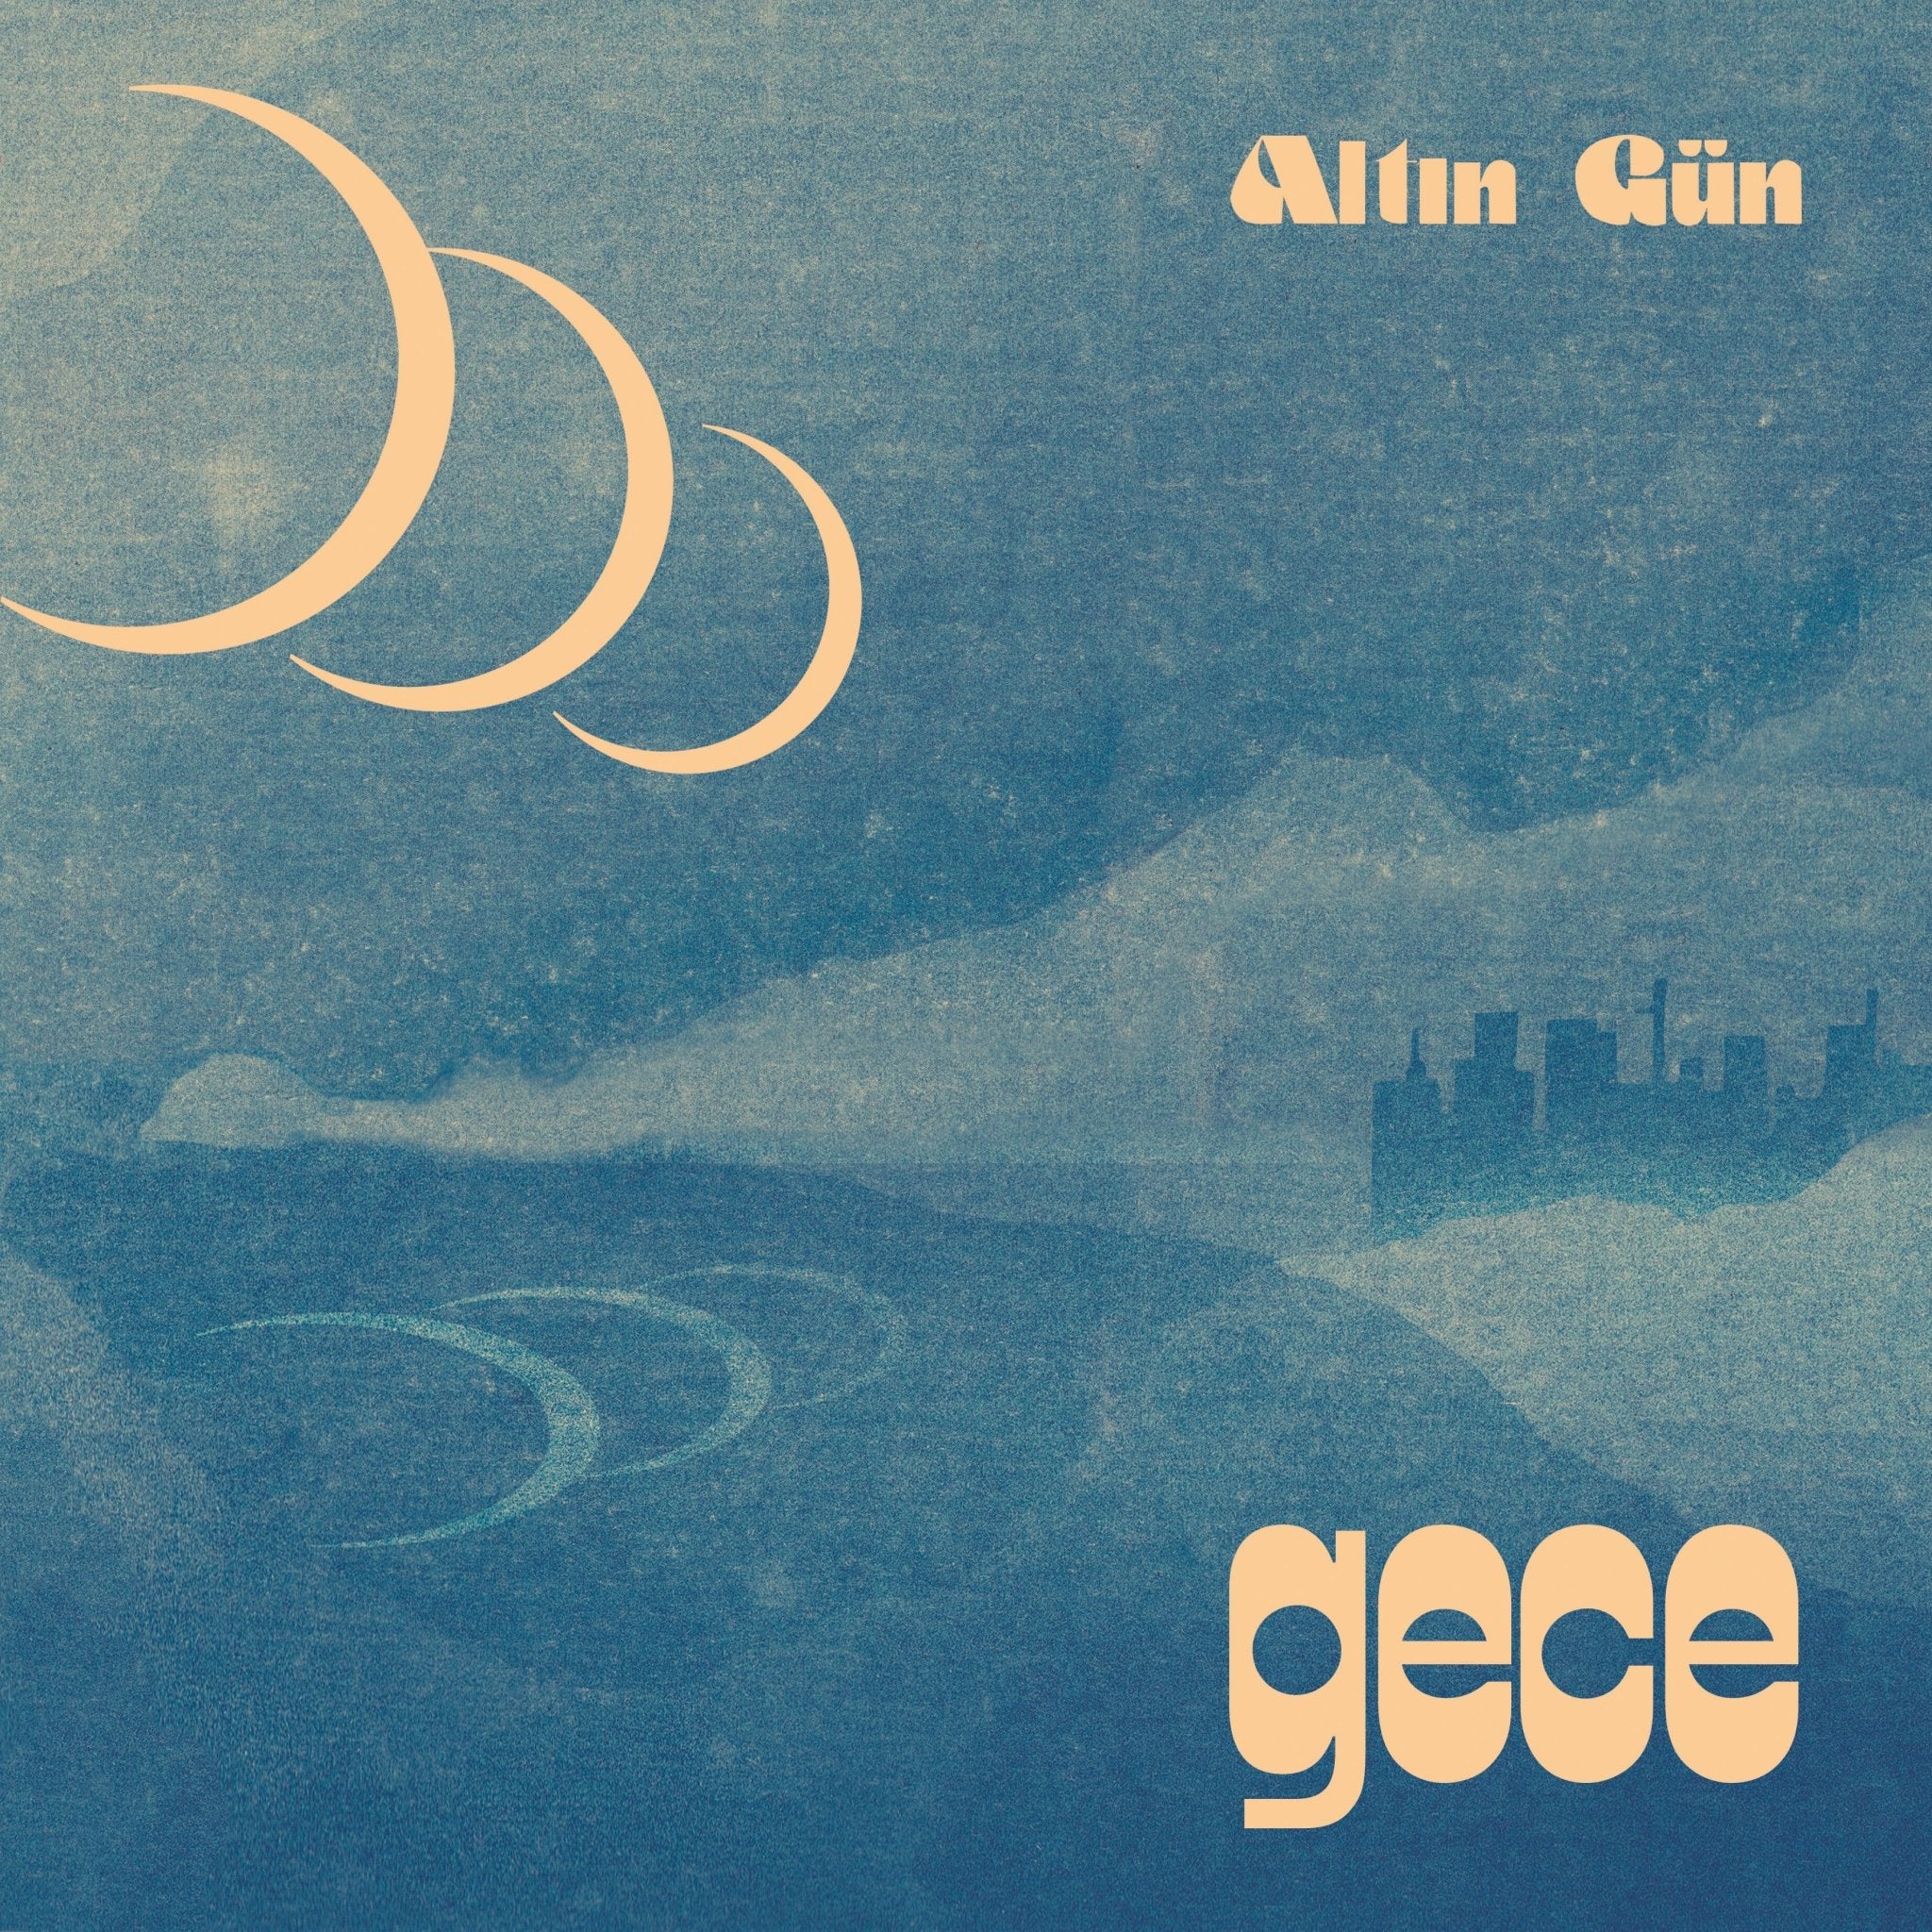 Altin Gün - Gece - Vinyl - LP - 33RPM